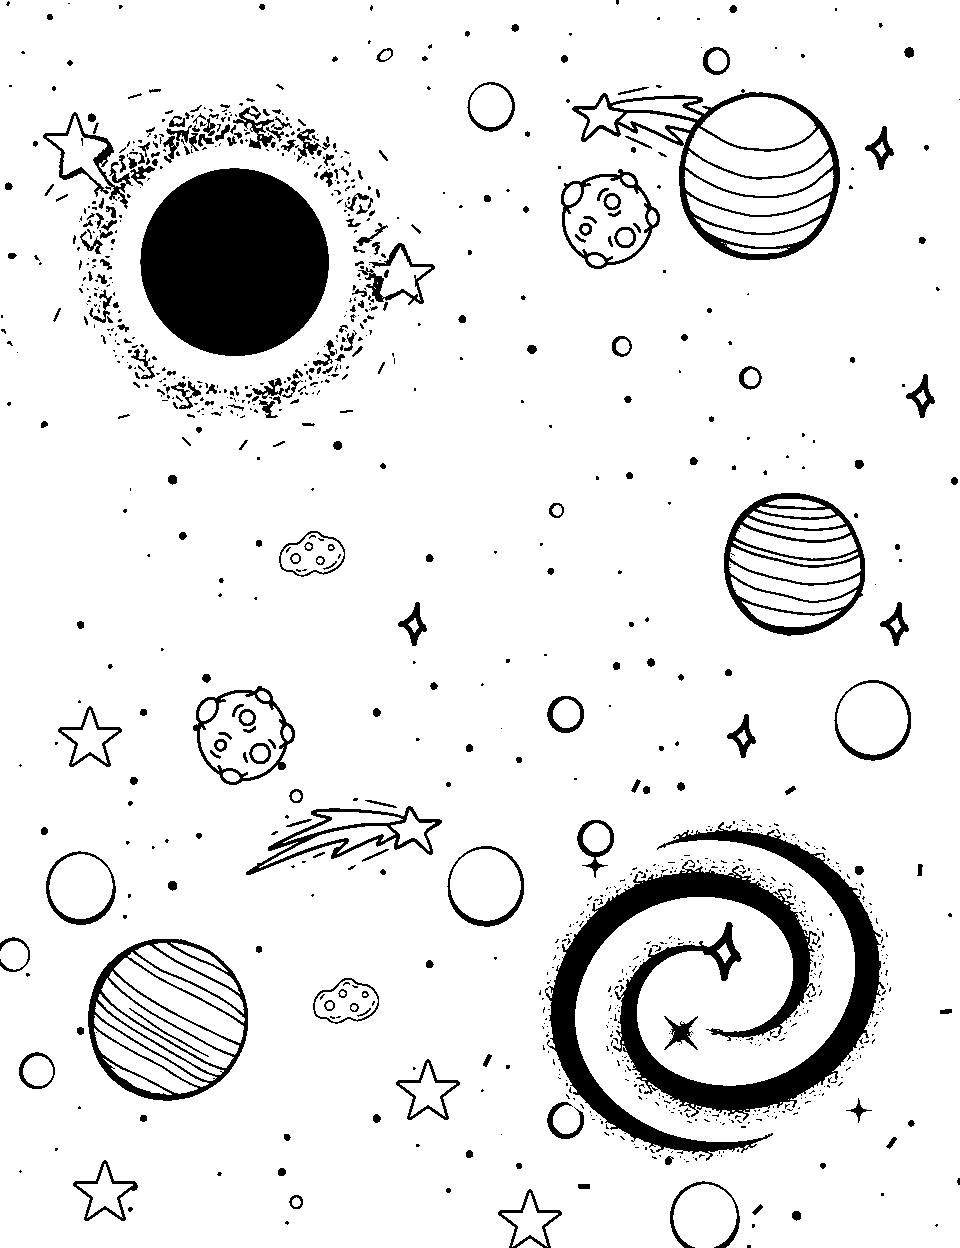 Universe's Infinite Wonders Coloring Page - Various celestial bodies like black holes, nebulae, and dwarf stars.